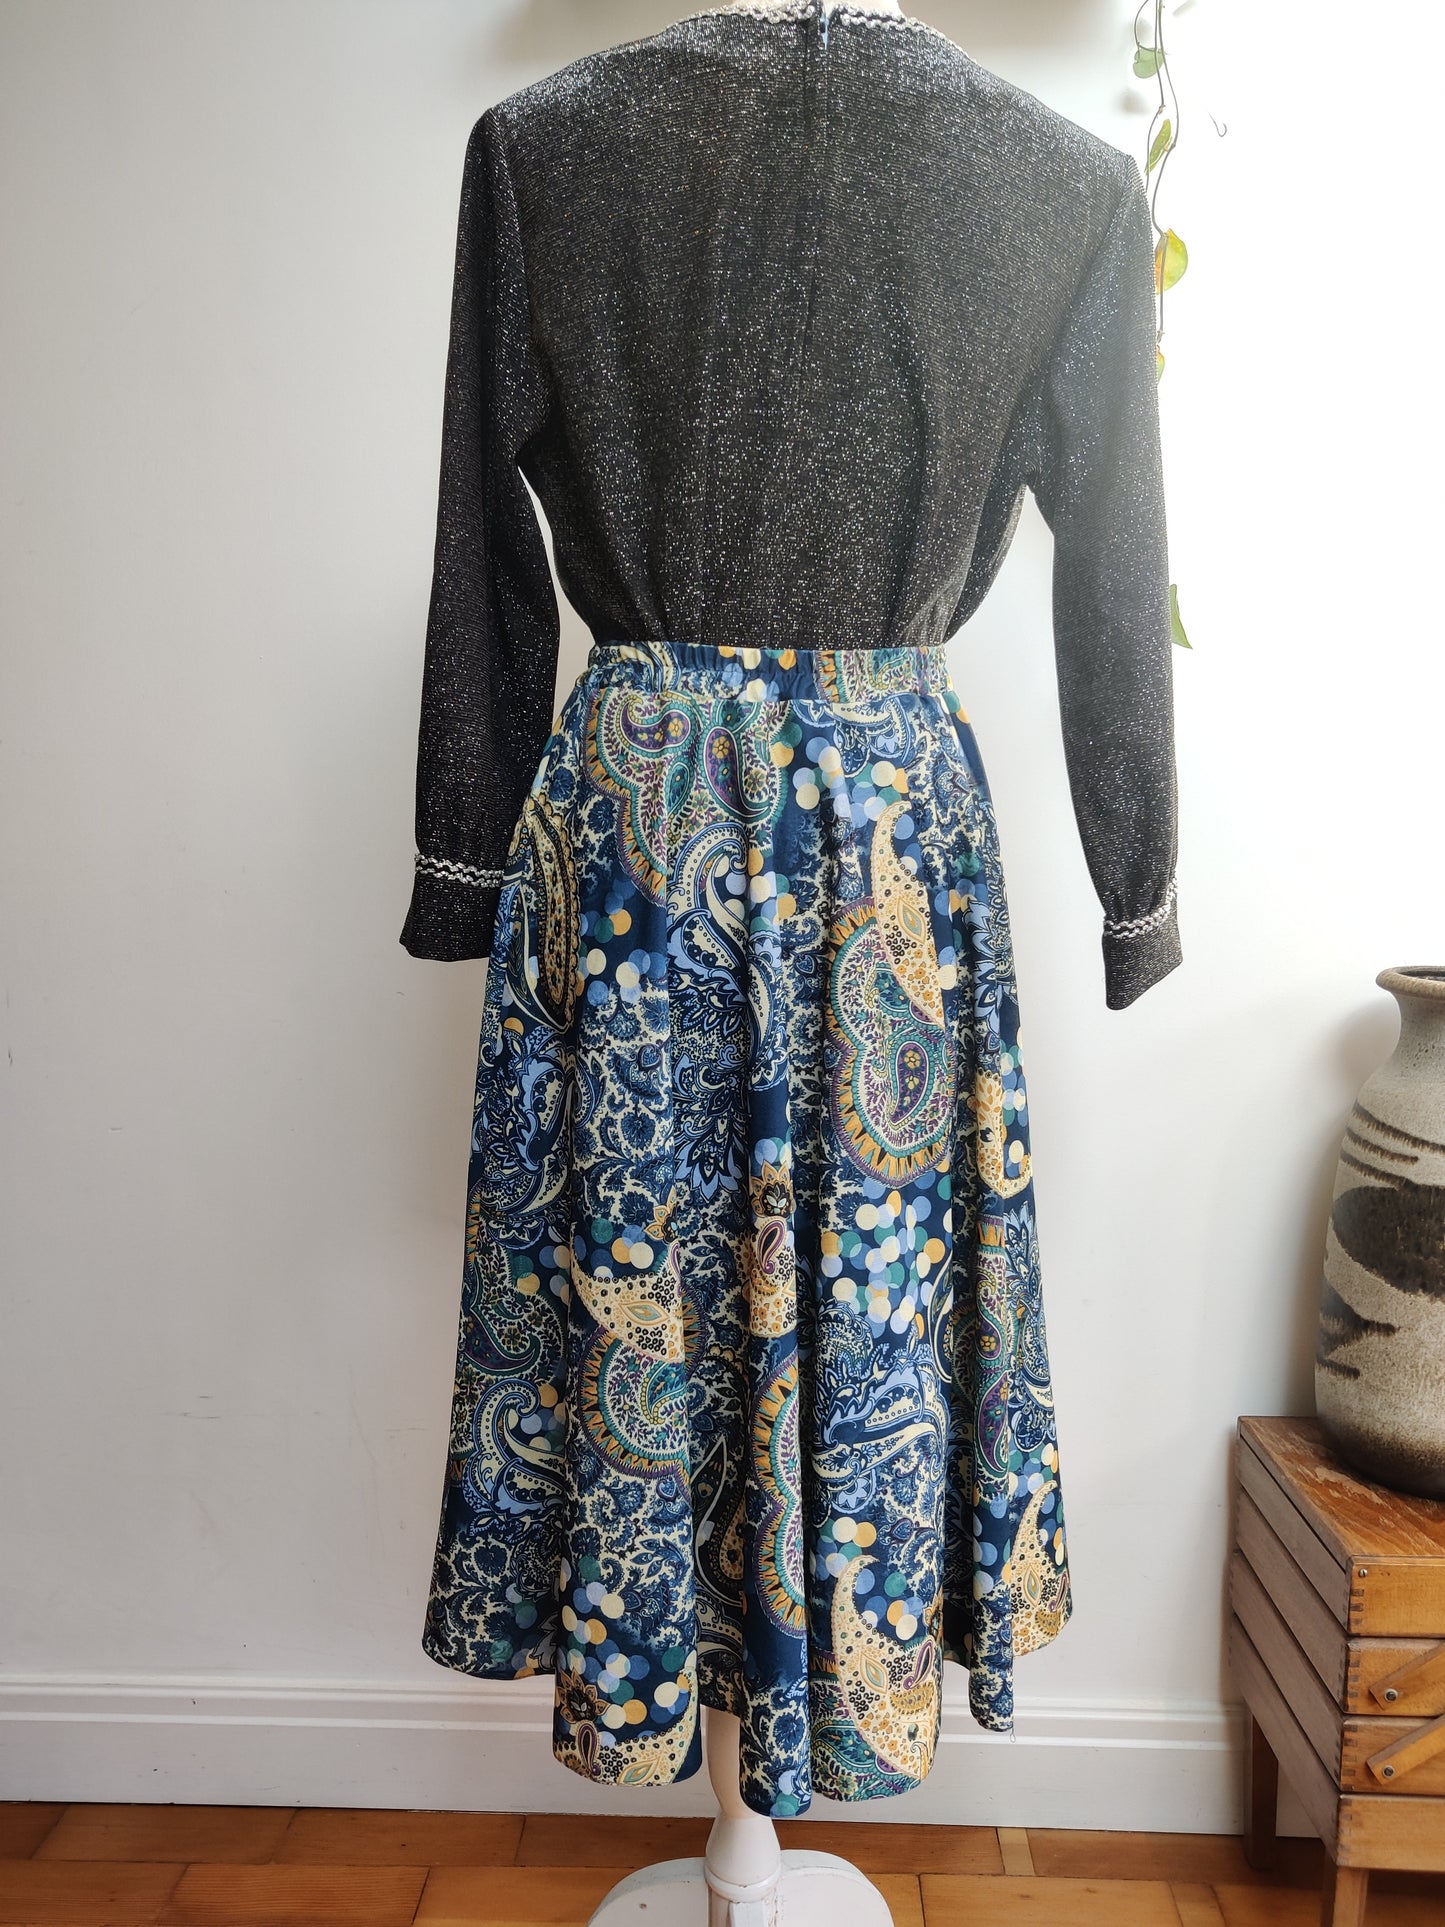 Flared skirt, size 16.